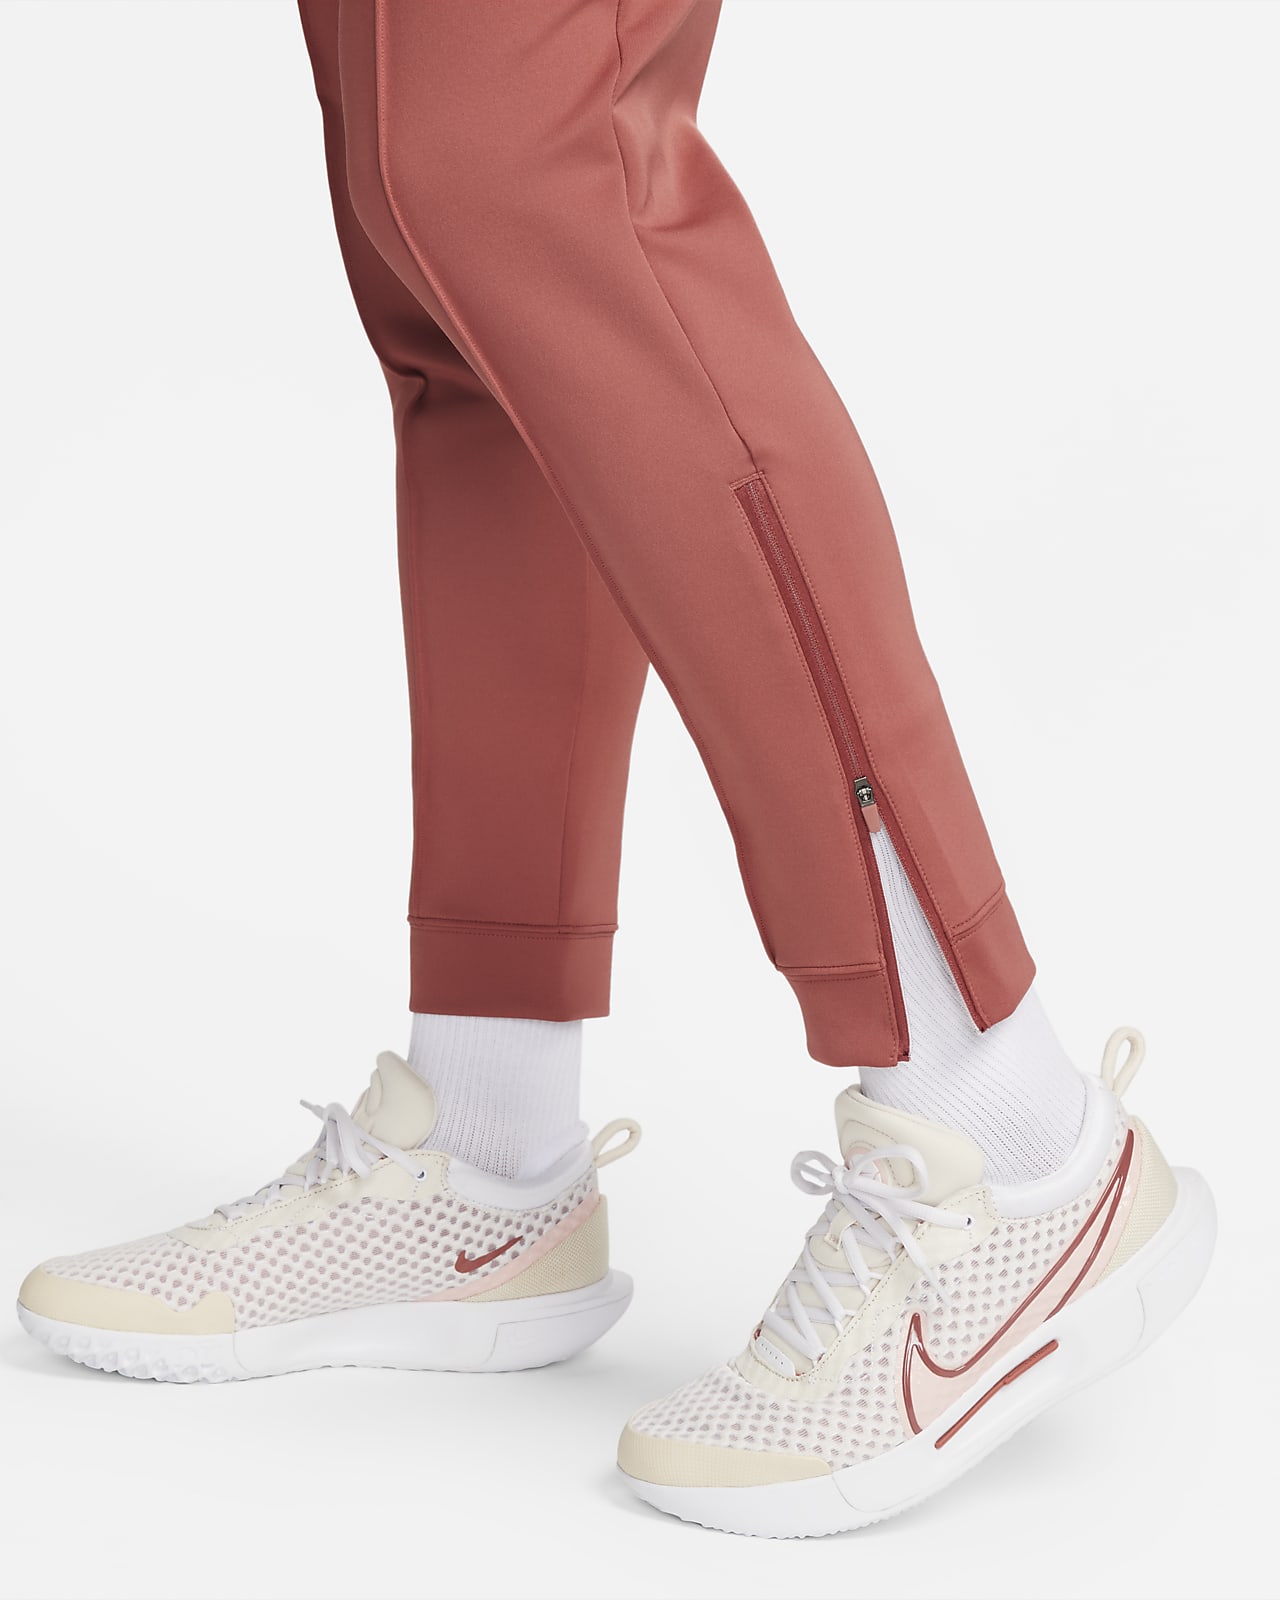 Pantalones tejidos de tenis para mujer NikeCourt Dri-FIT.